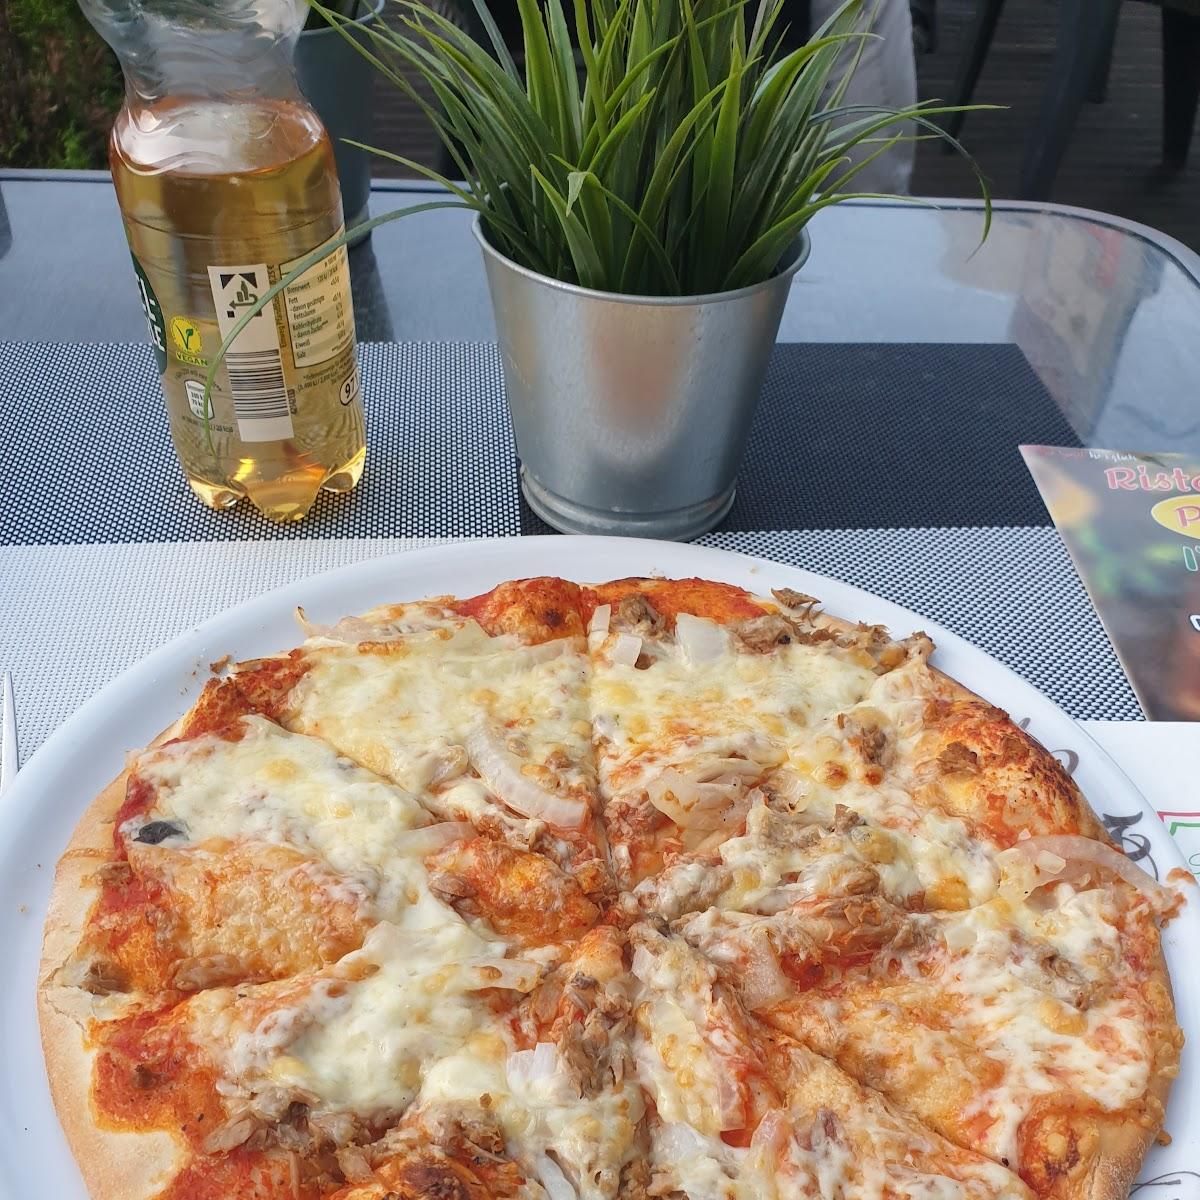 Restaurant "Pizza Italia & Jade" in Dortmund